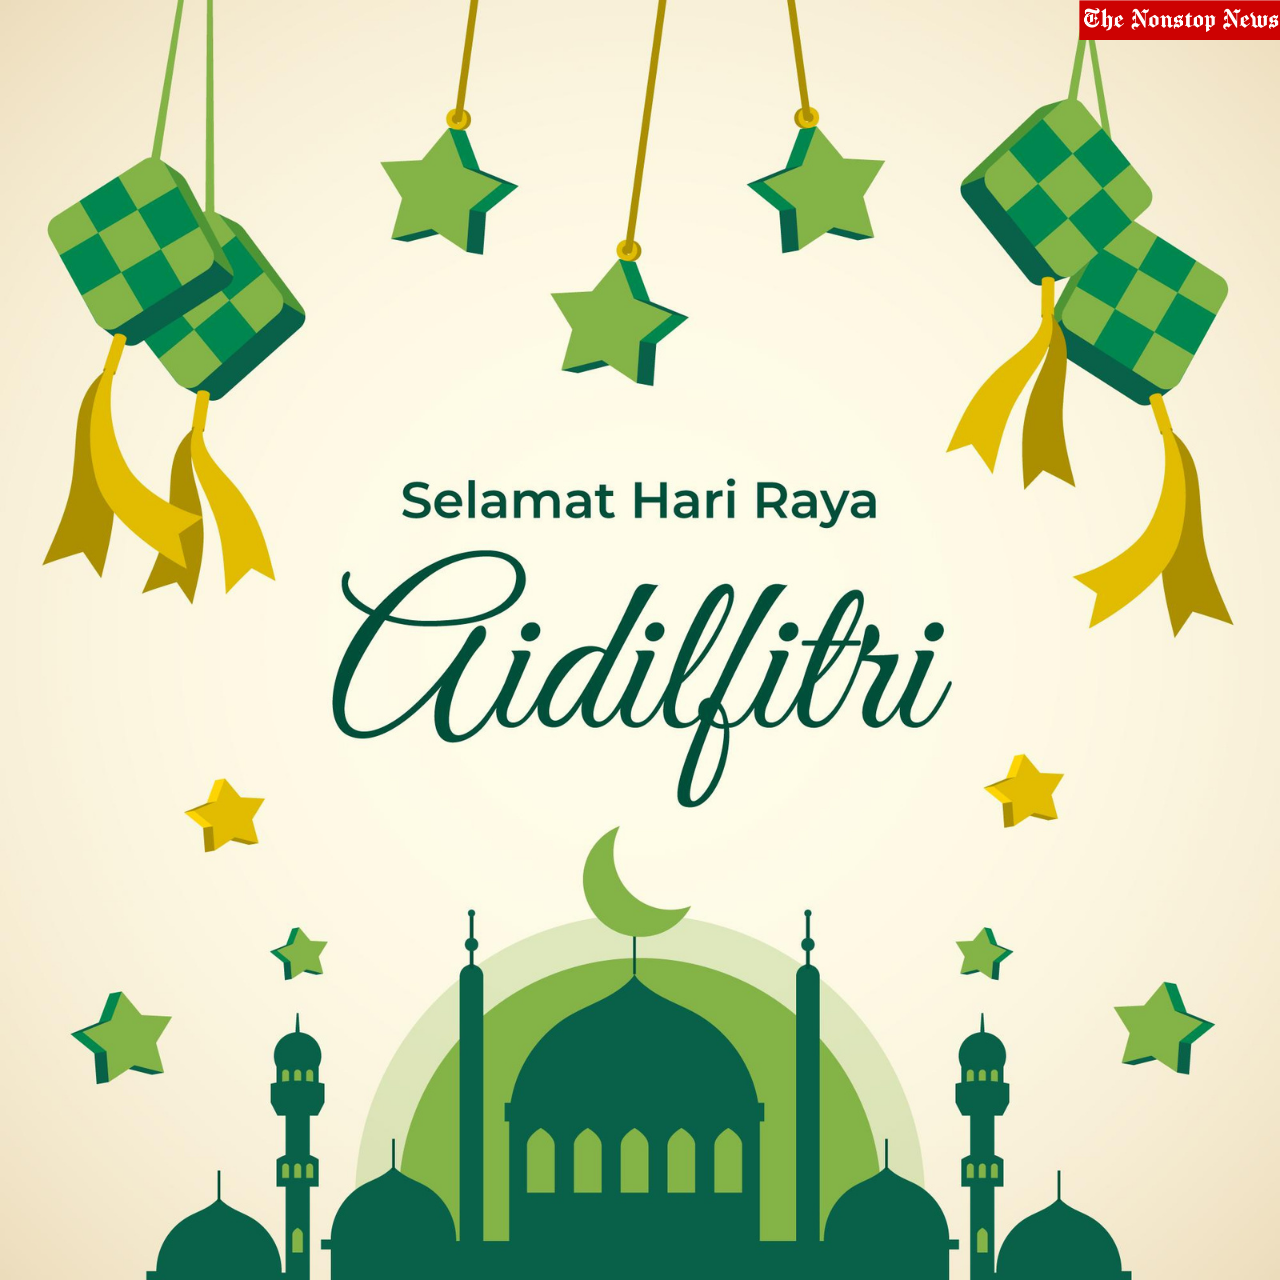 Selamat Hari Raya Aidilfitri 2022: Malay Wishes, Greetings, Quotes, Vector, Messages To Share